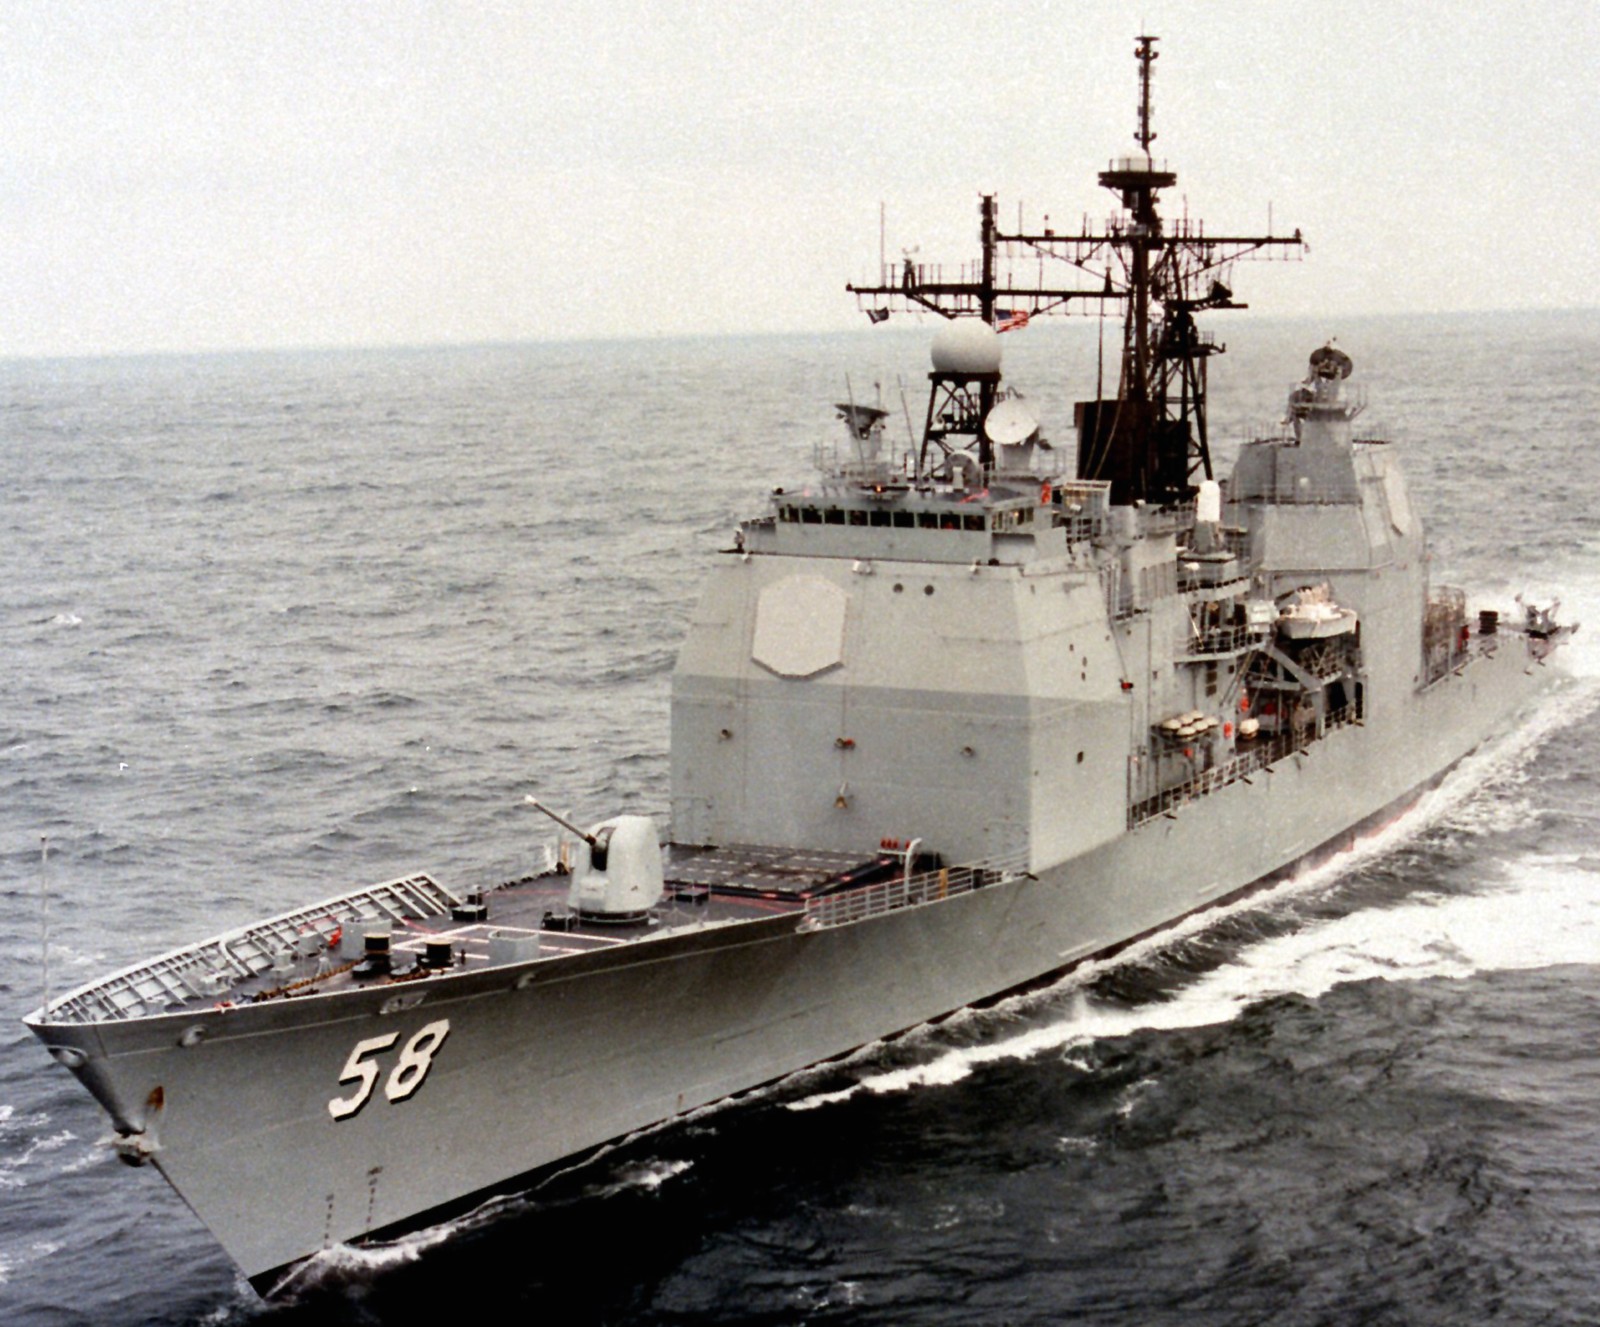 cg-58 uss philippine sea ticonderoga class guided missile cruiser aegis us navy trials 76